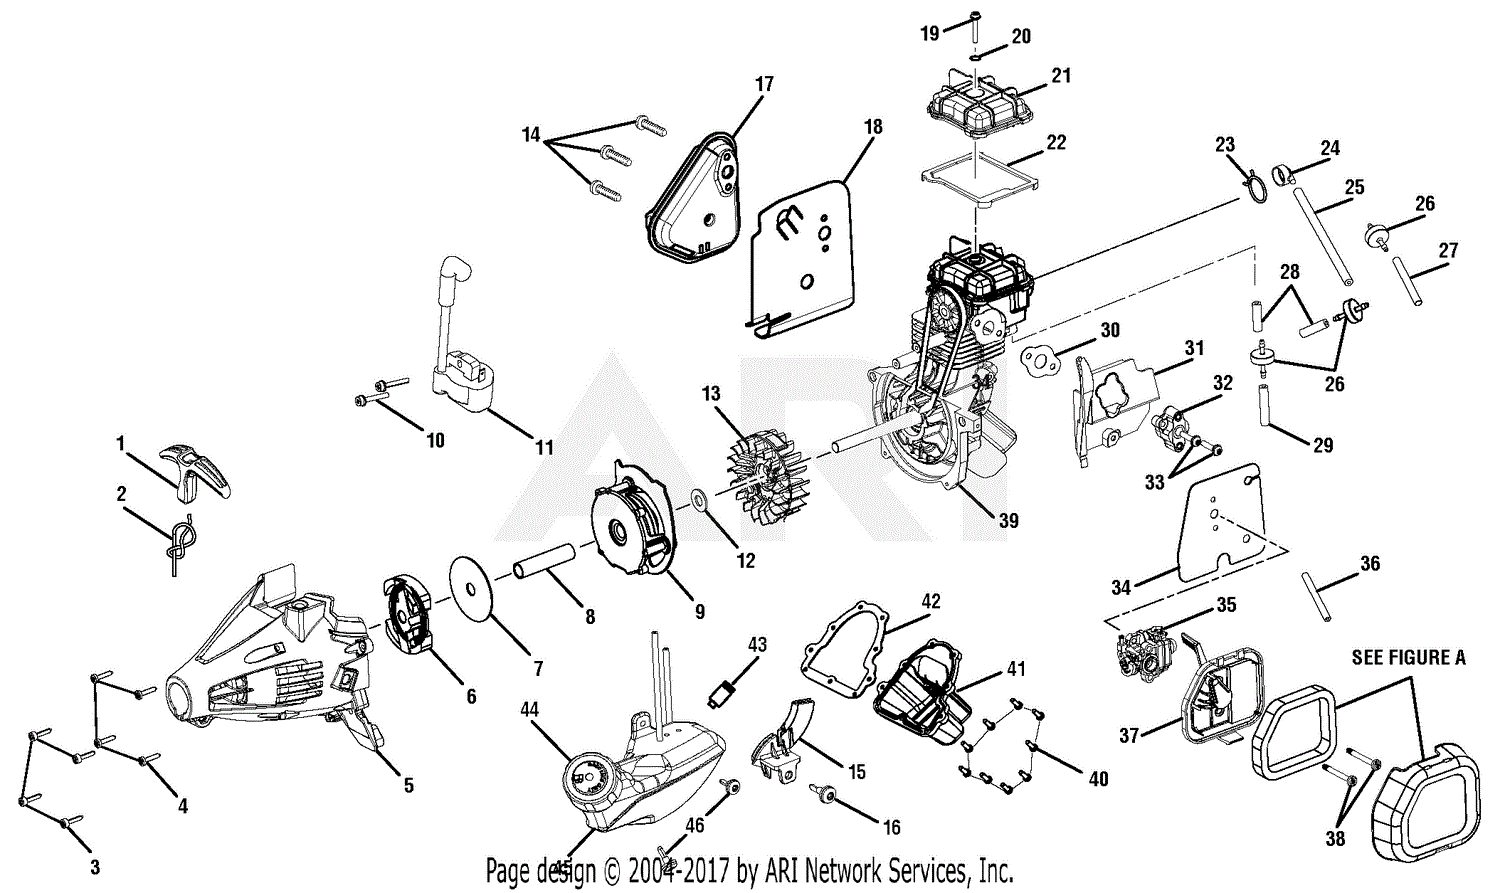 Ryobi X430 Parts Diagram Wiring Diagram